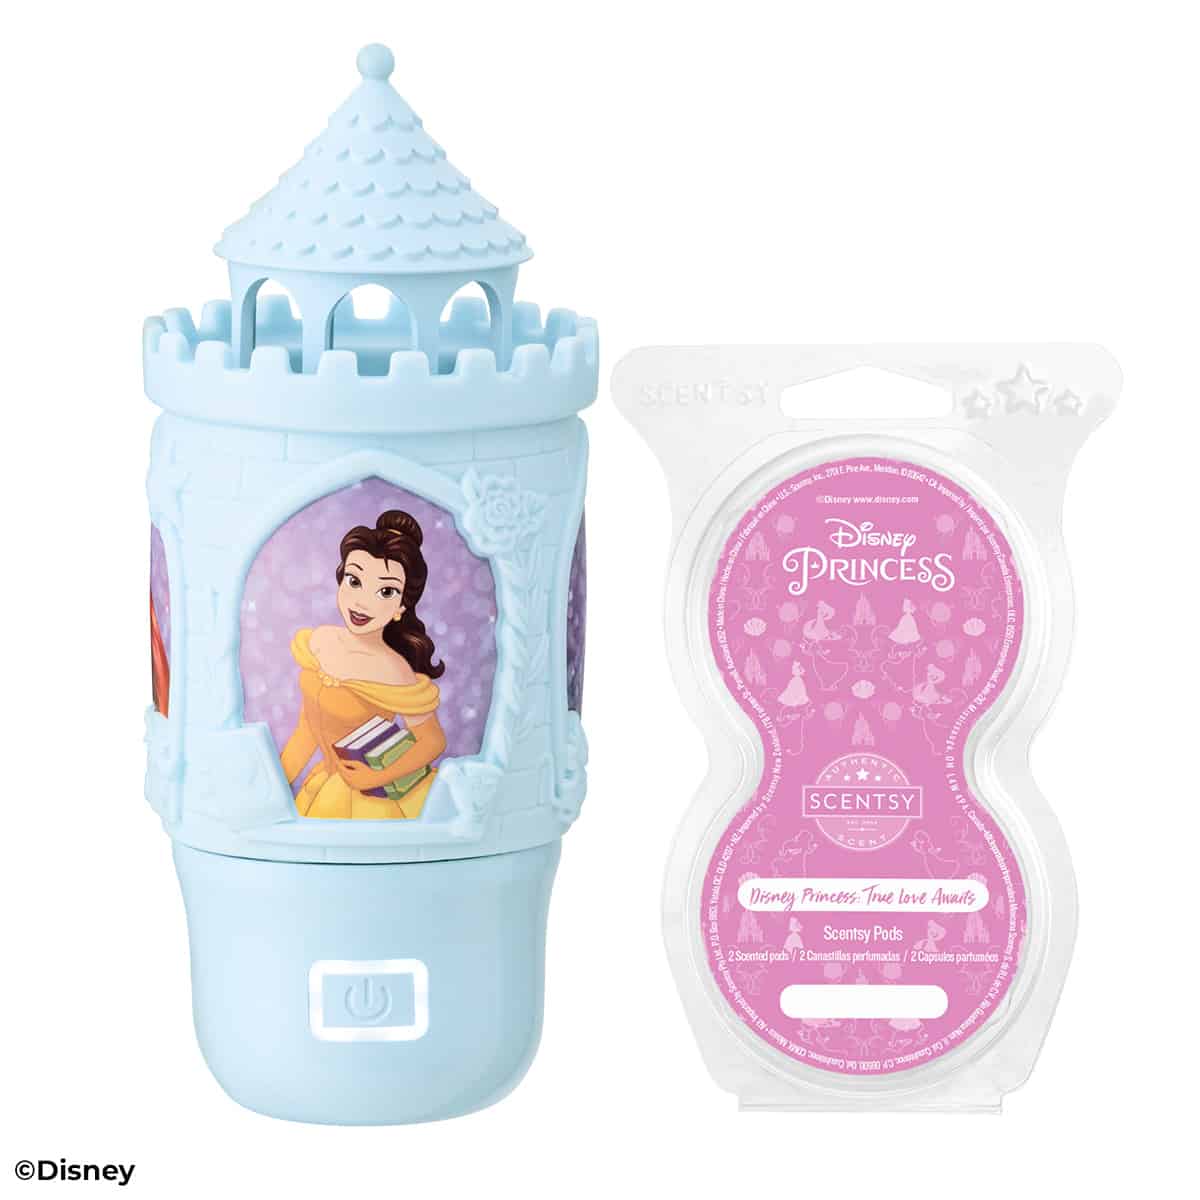 Disney Princess Wall Fan Diffuser (Belle, Ariel, Cinderella) + Free Scentsy Pods